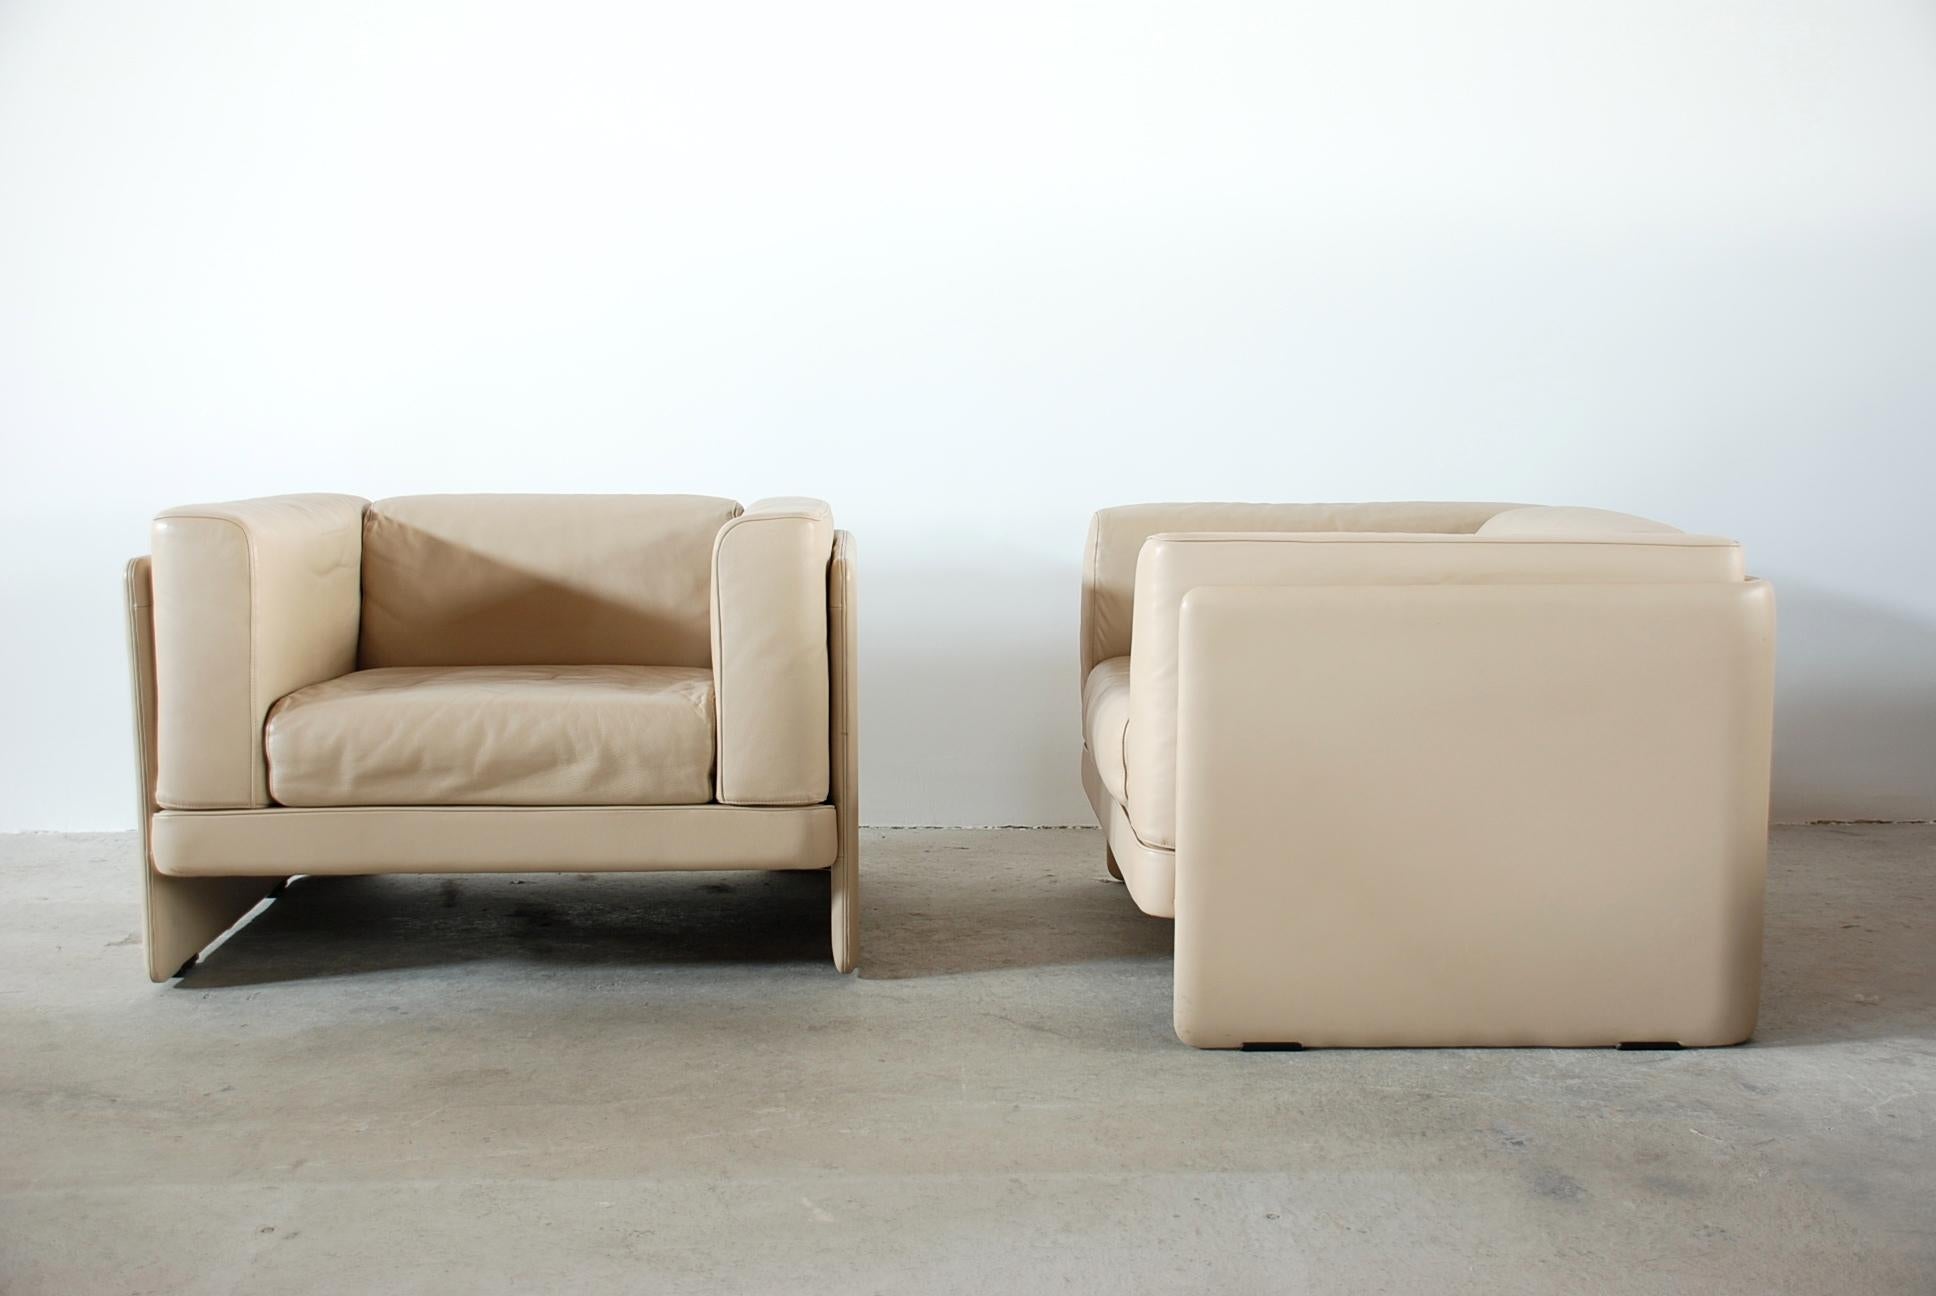 Italian architect Tito Agnoli design this Classic armchair for Poltrona Frau.
This modell 